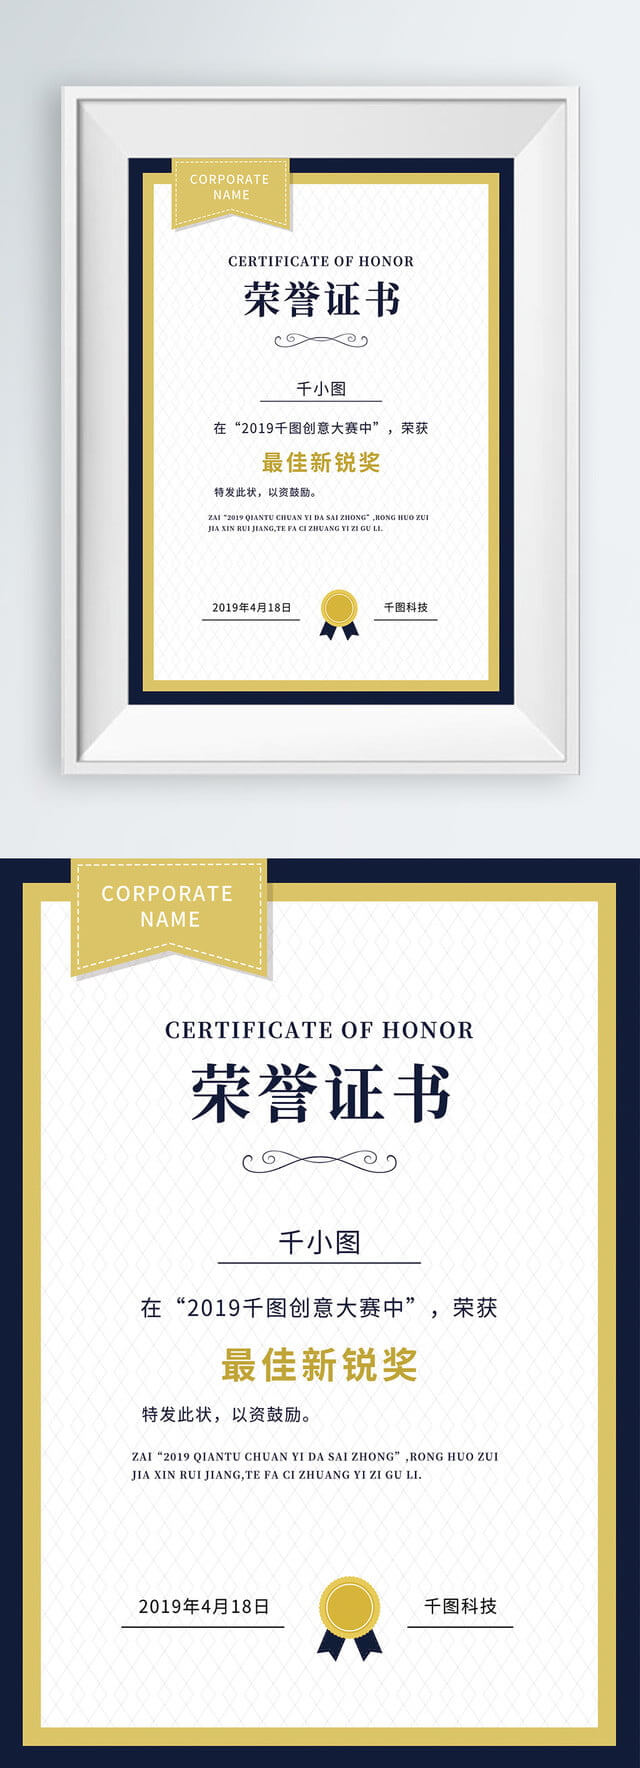 Certificate Authorization Certificate Certificate Of Honor Regarding Certificate Of License Template